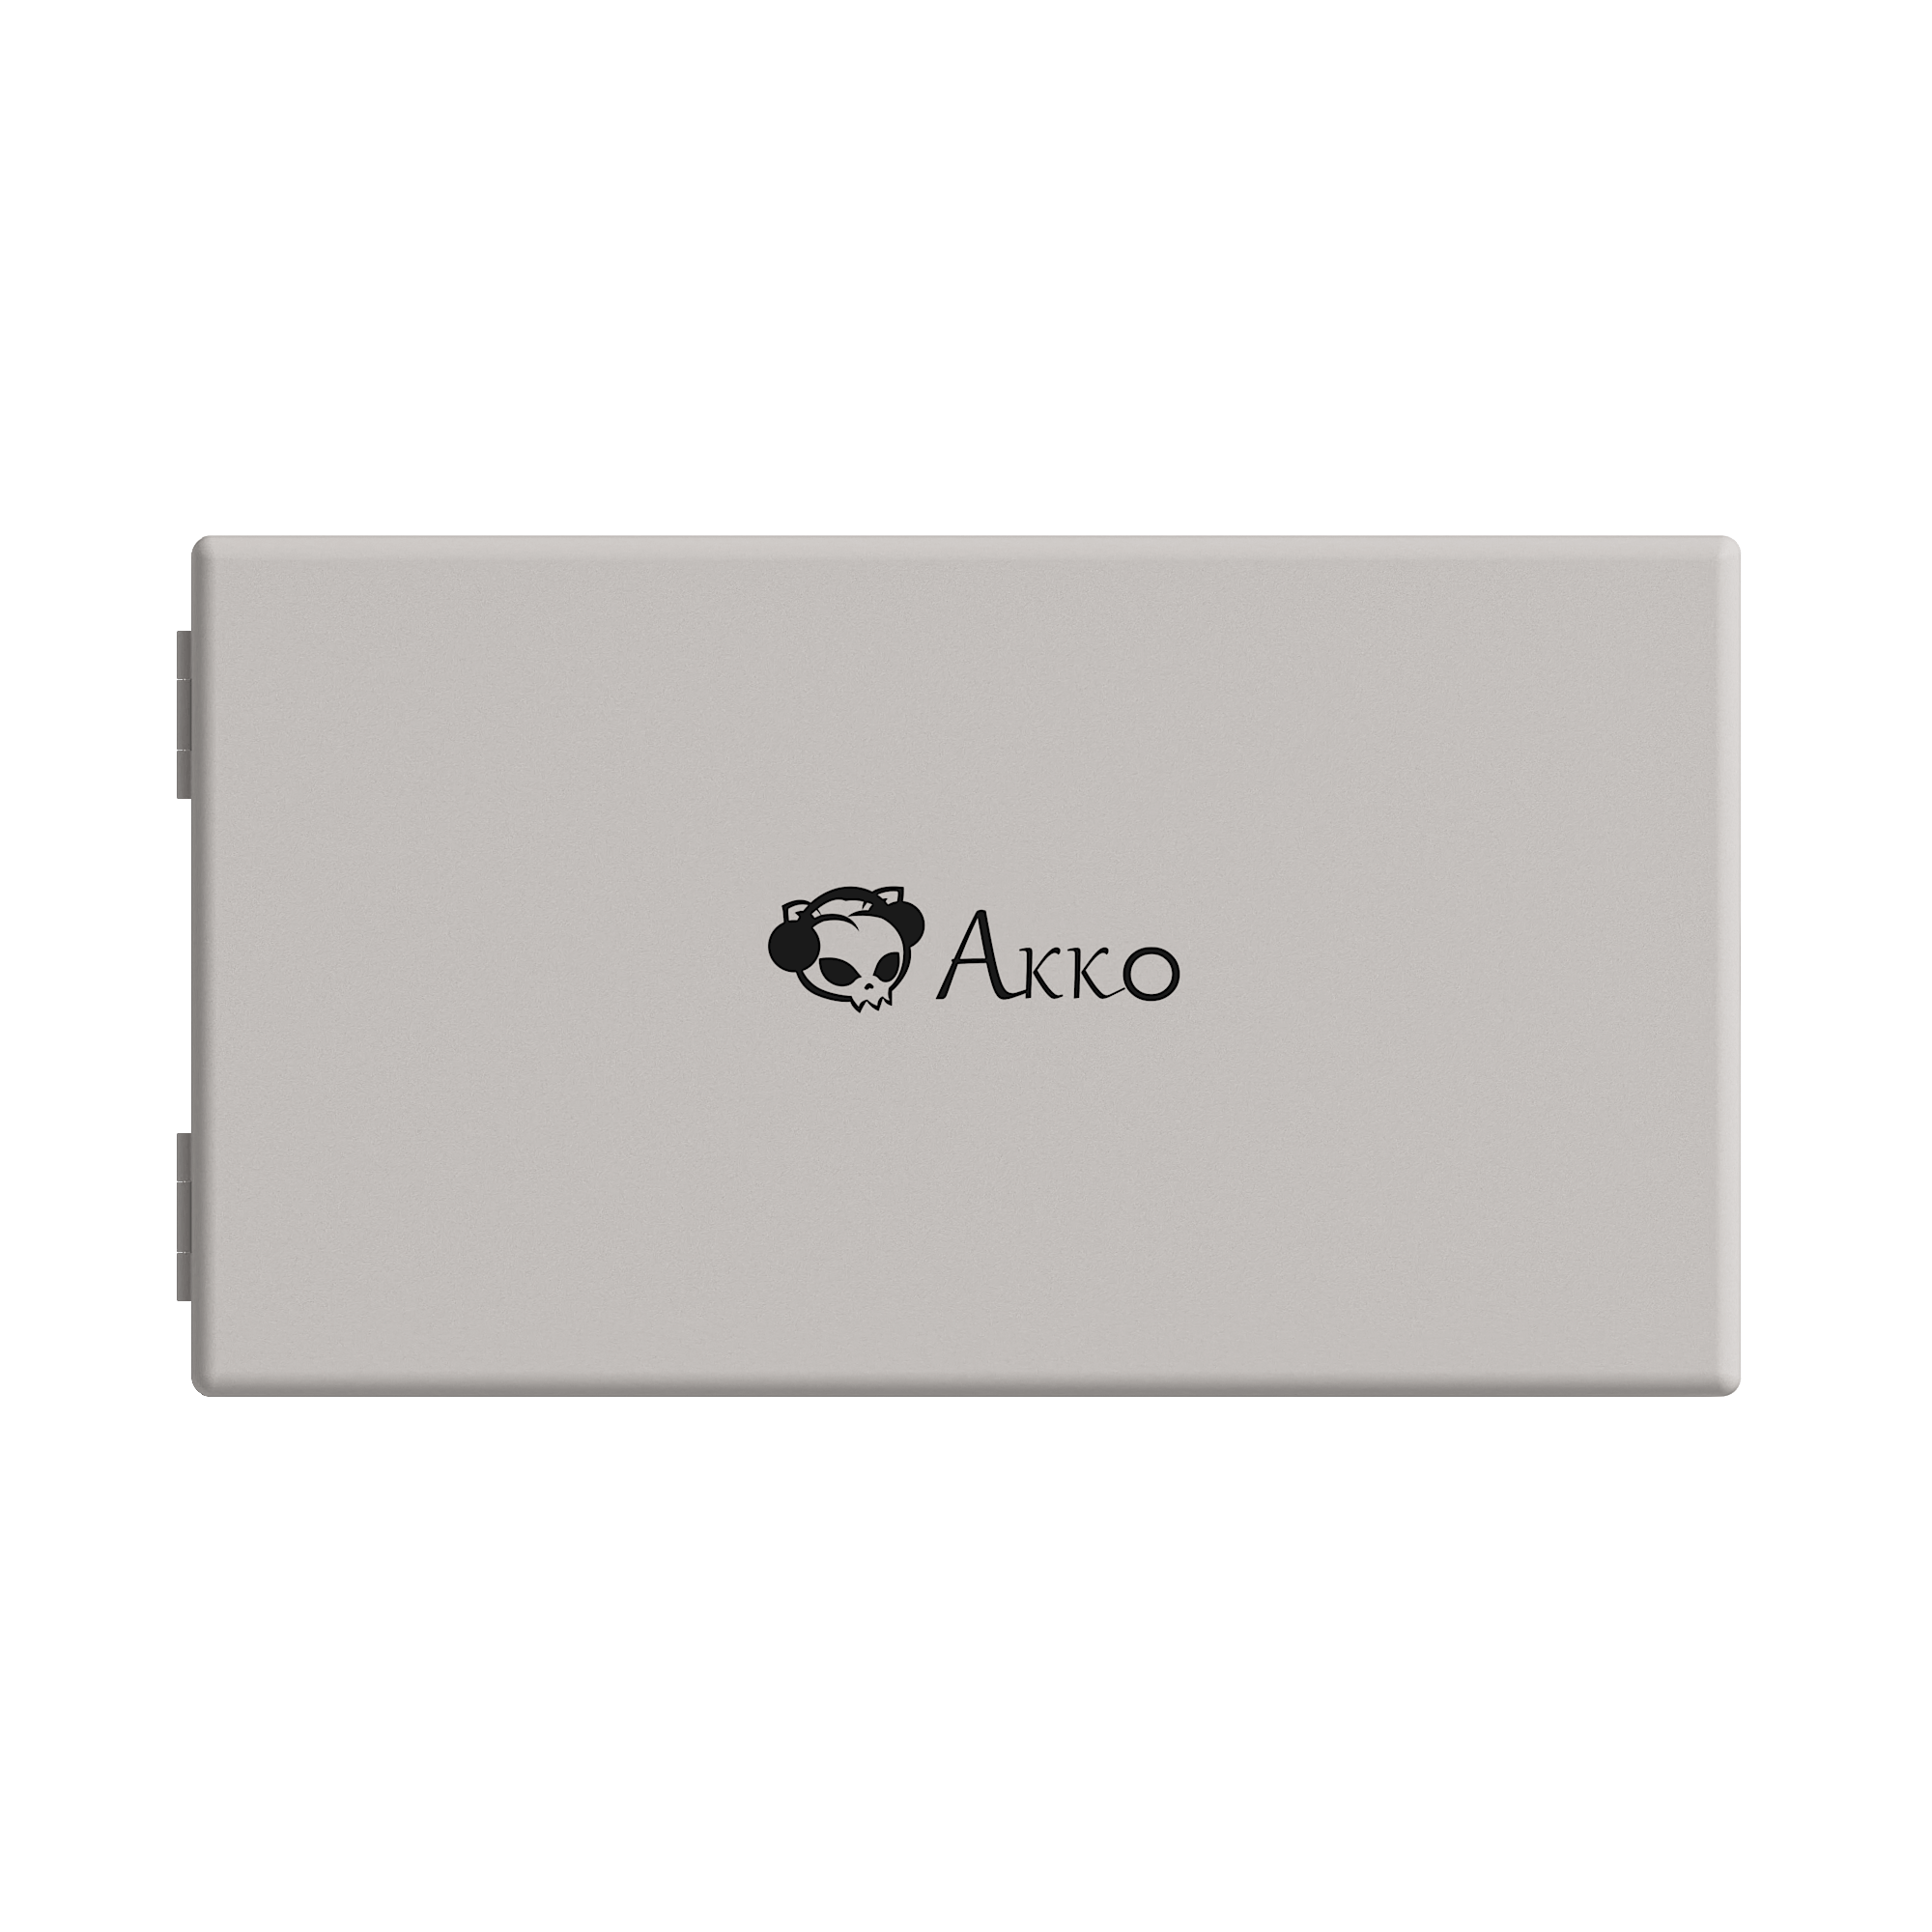 Akko Keycap Set Collection Box